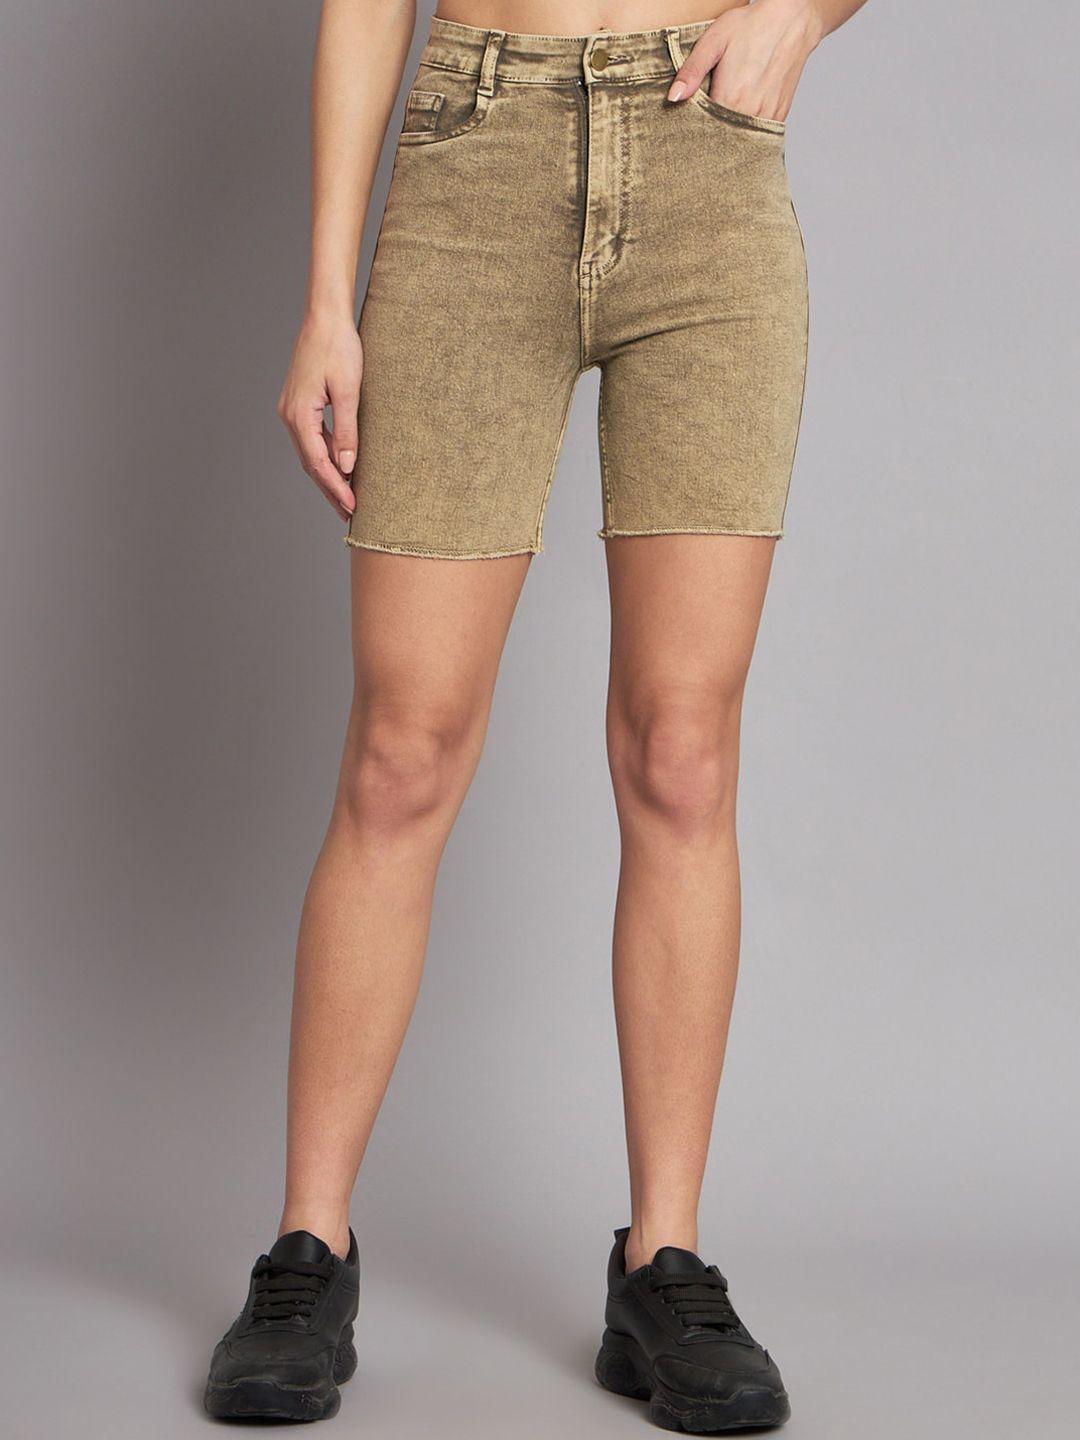 guti-women-high-rise-cotton-denim-shorts